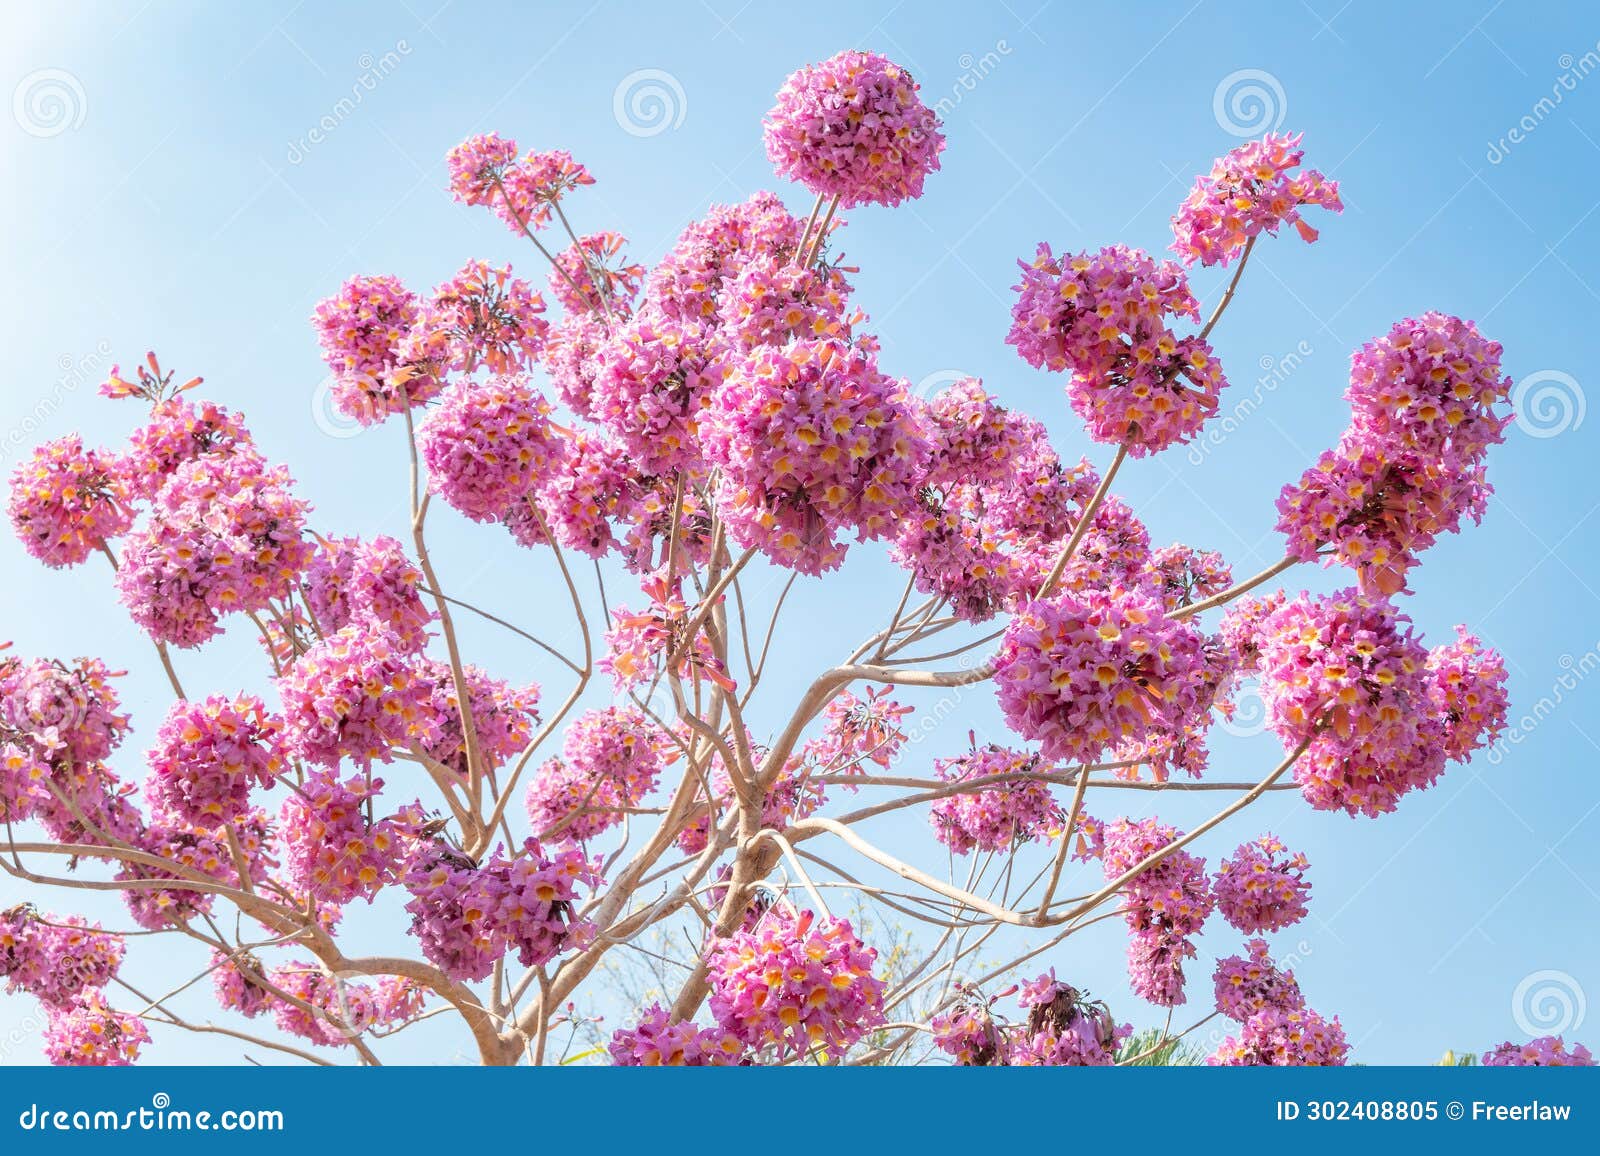 blooming tabebuia rosea or tabebuia chrysantha nichols under blue sky horizontal composition